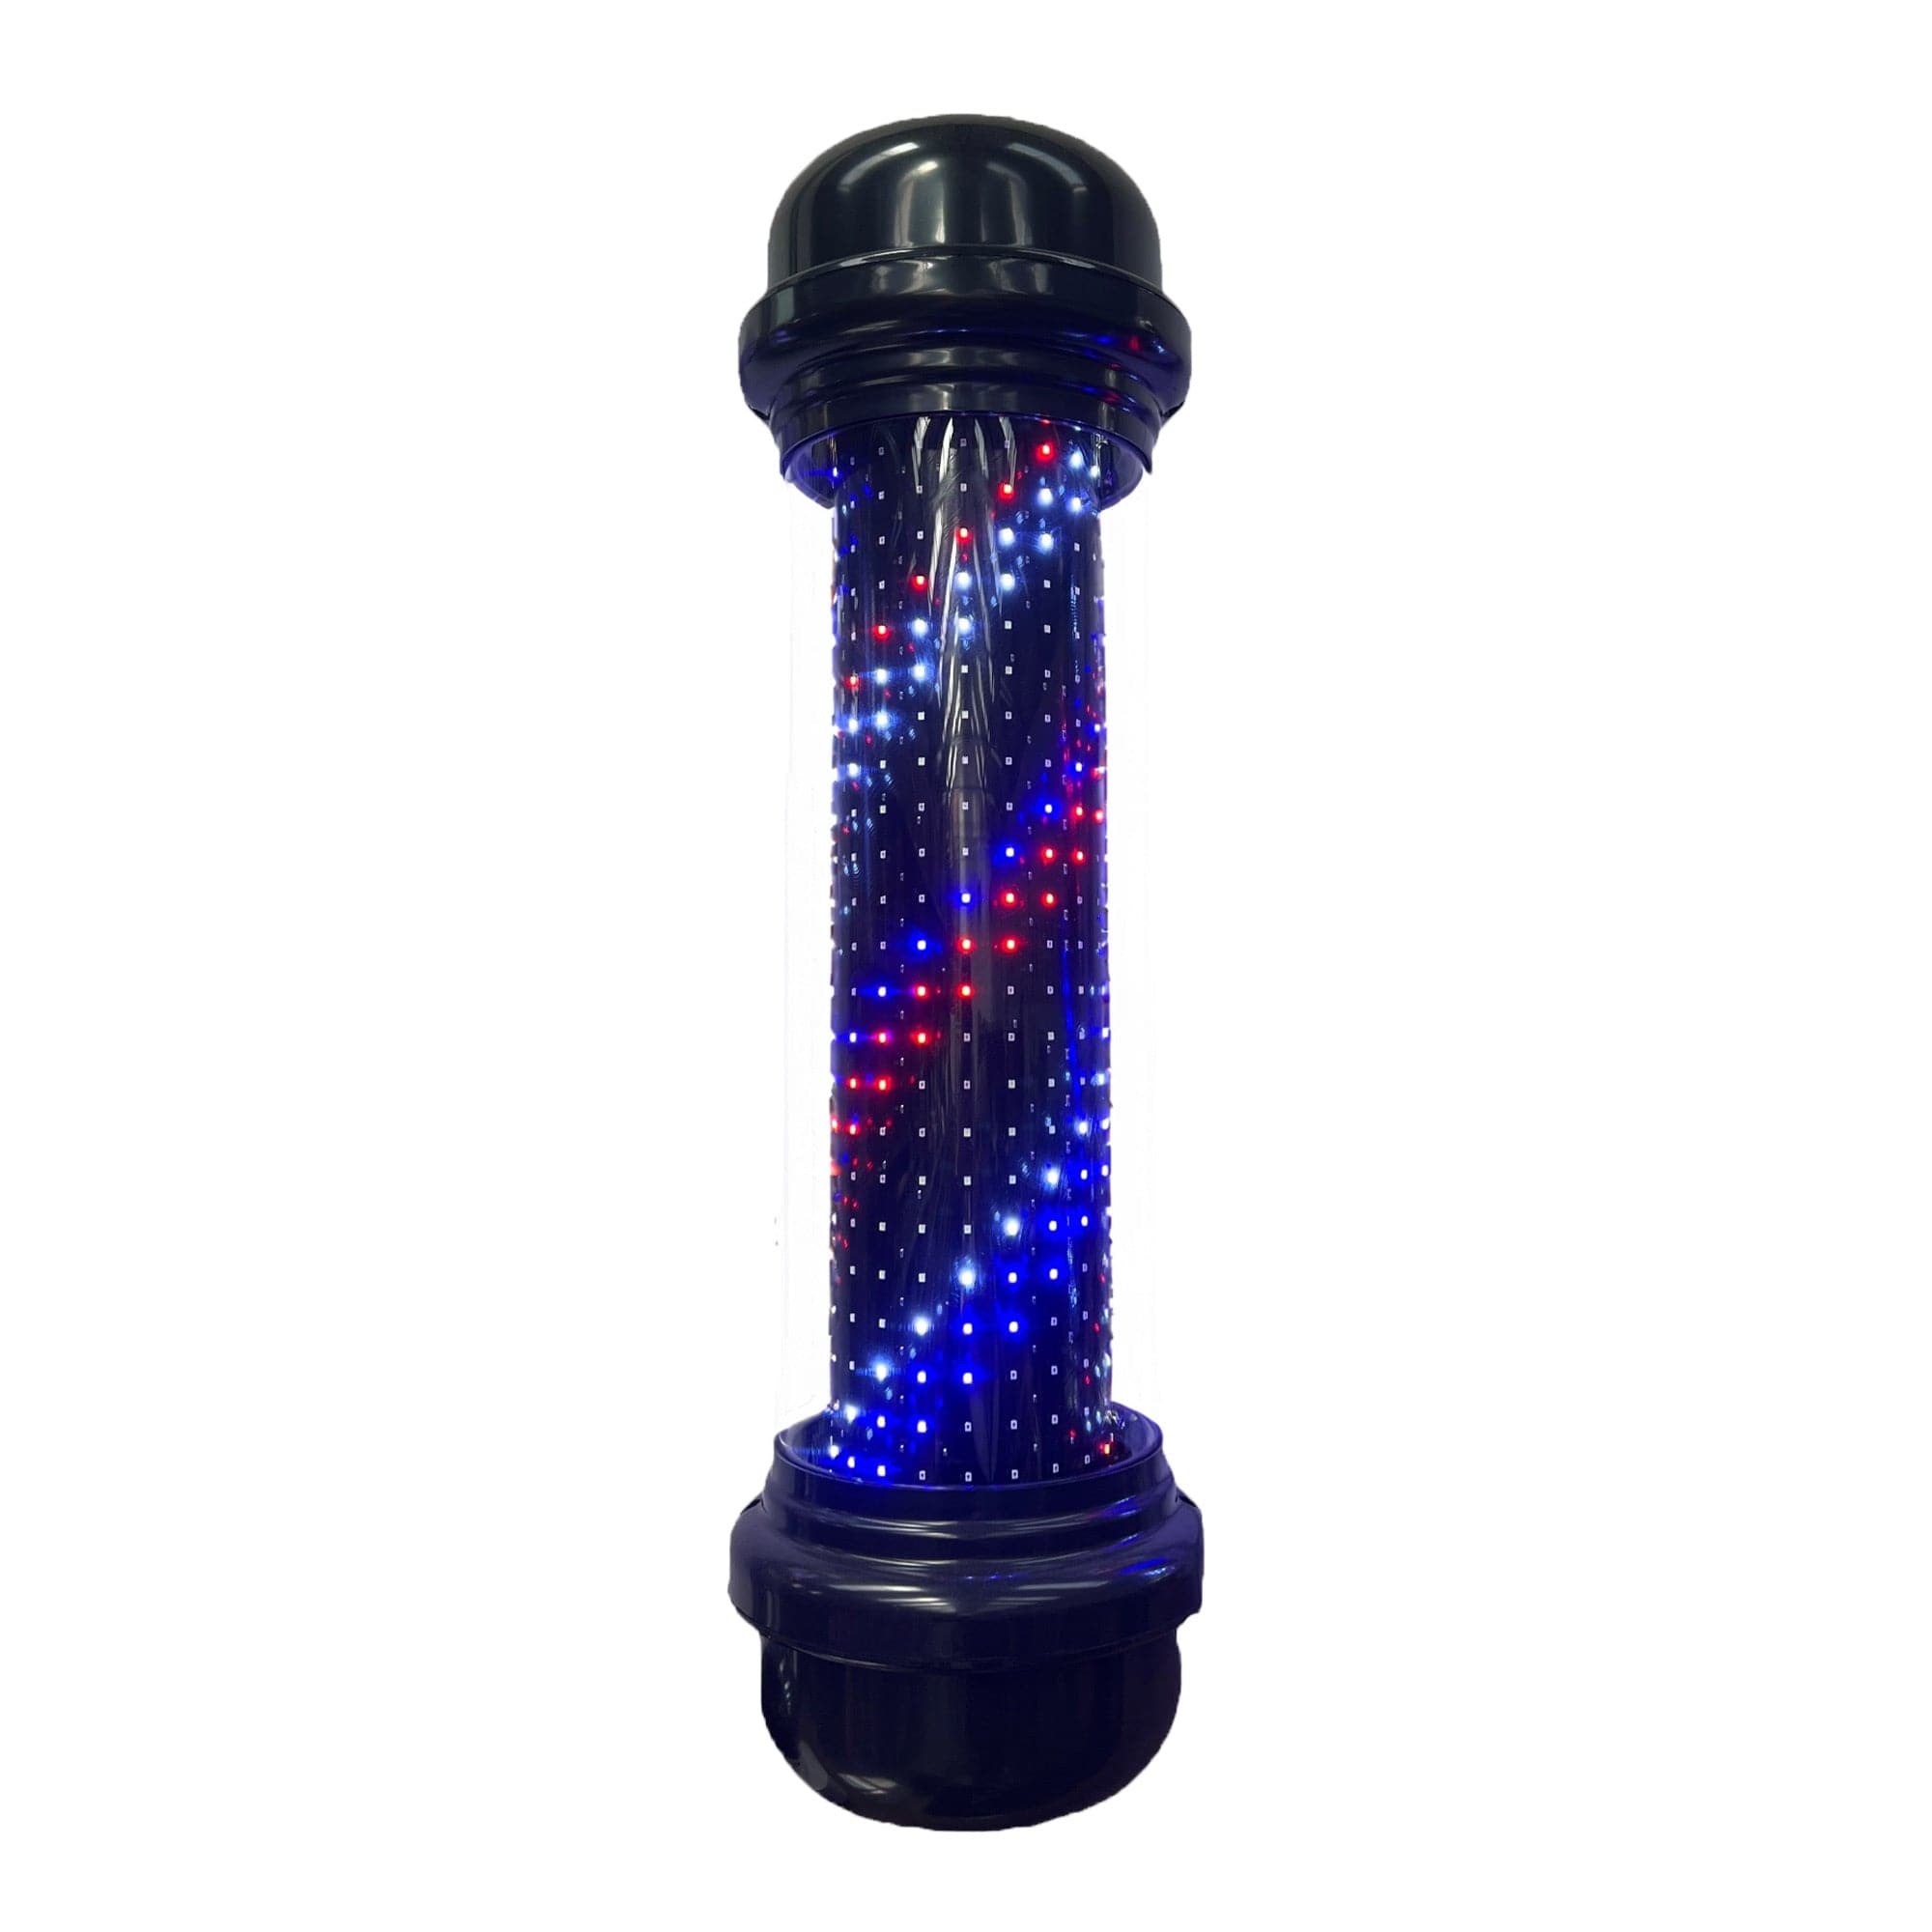 Gabri - Classic Barber Pole Digital Led Light 5 Modes With Remote Control (Black) 70cm